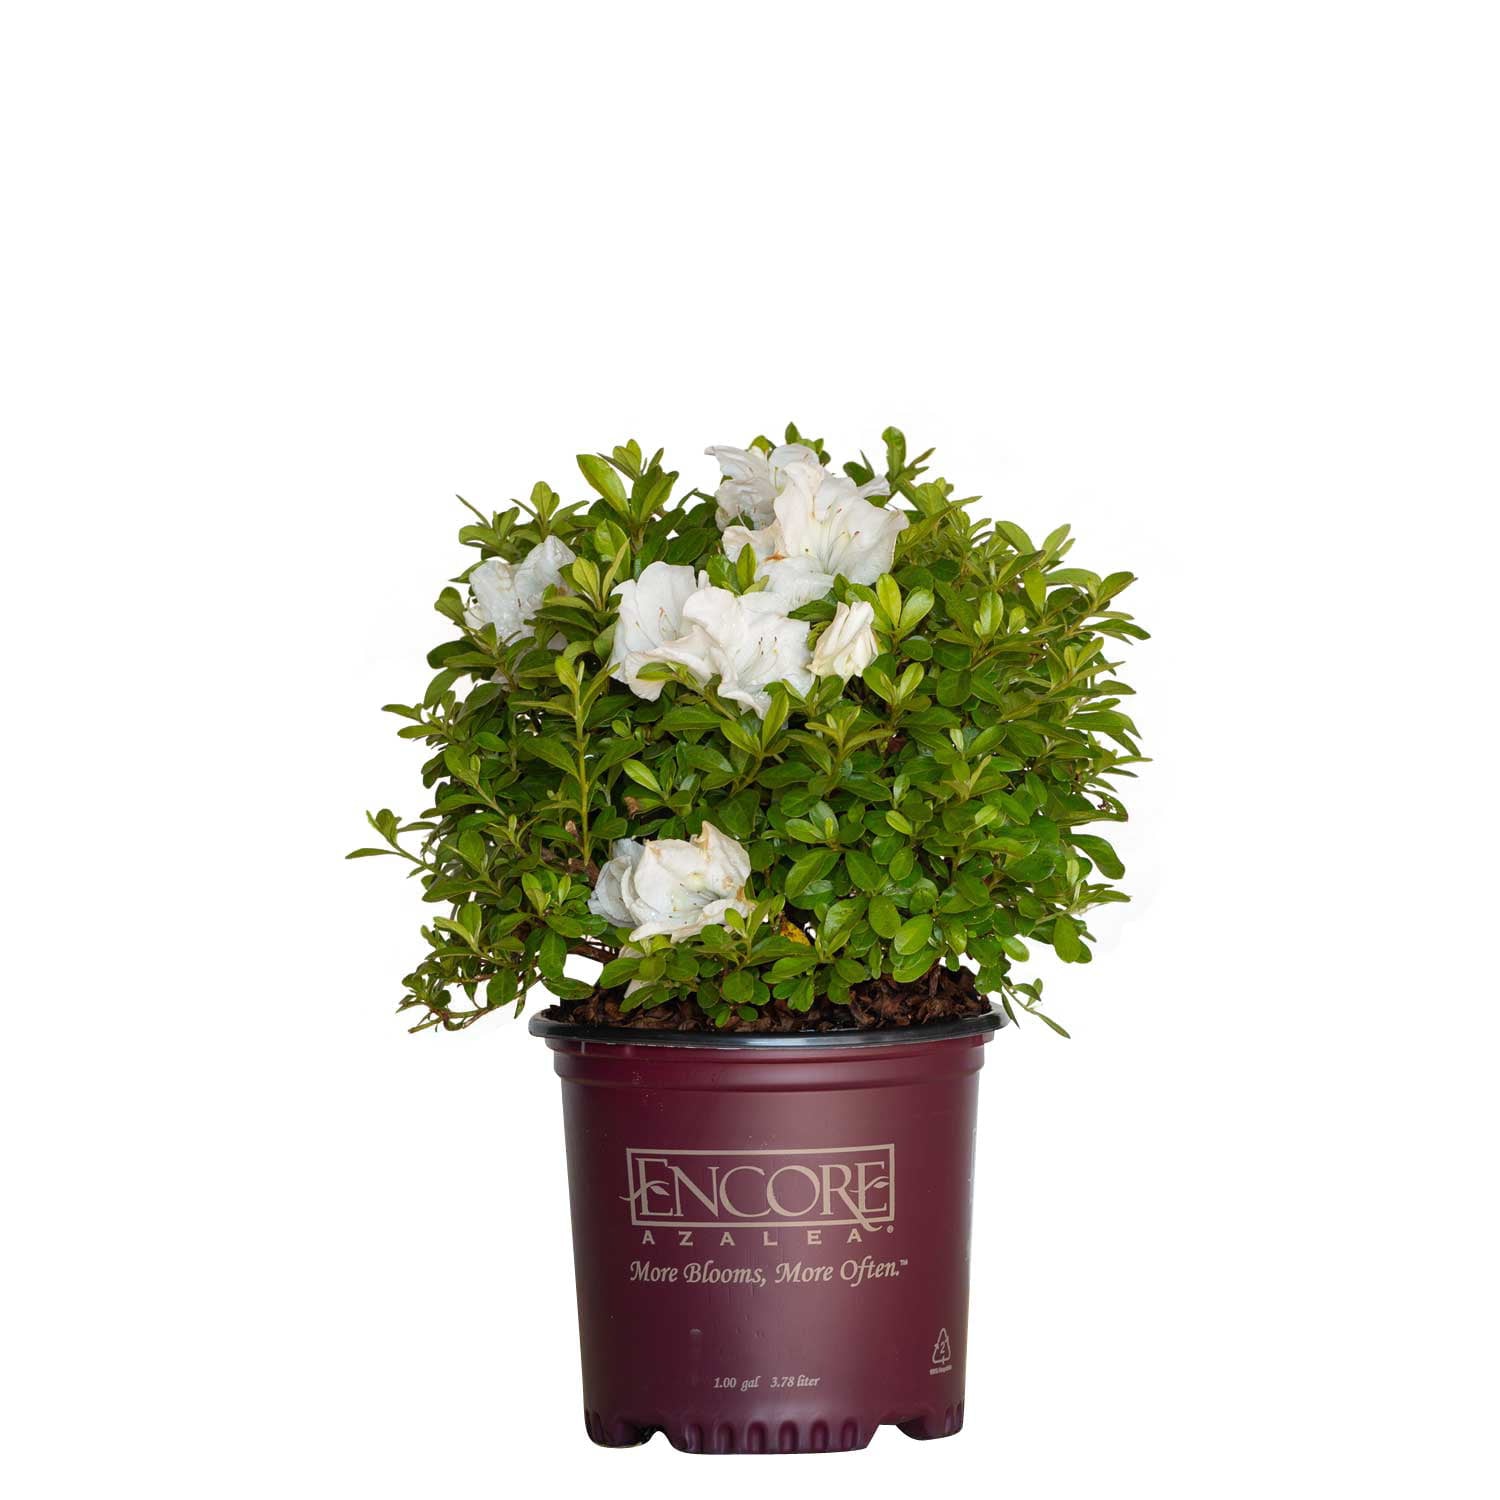 Encore Azalea Autumn Angel (1 Gallon) White Flowering Shrub - Full Sun Live Outdoor Plant